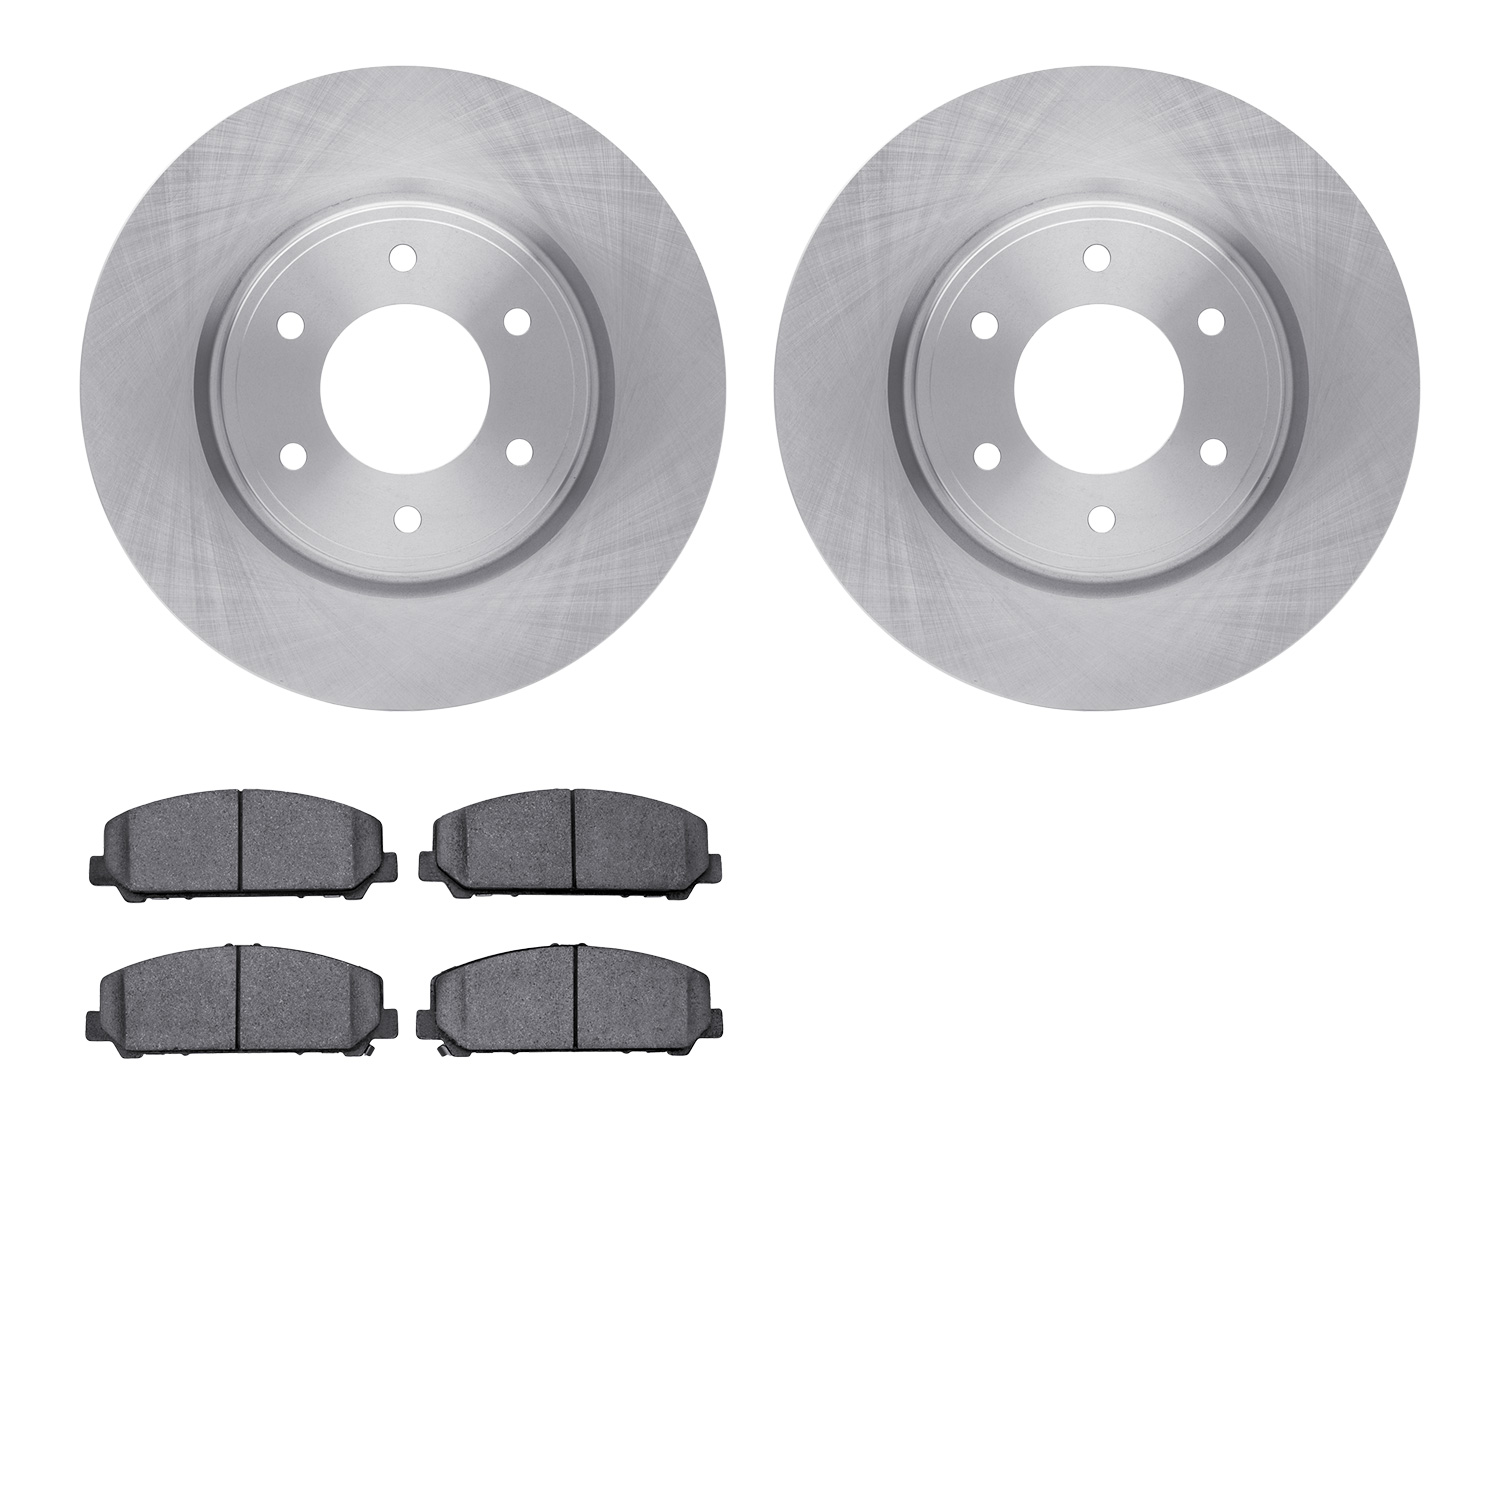 6202-67004 Brake Rotors w/Heavy-Duty Brake Pads Kit, Fits Select Infiniti/Nissan, Position: Front